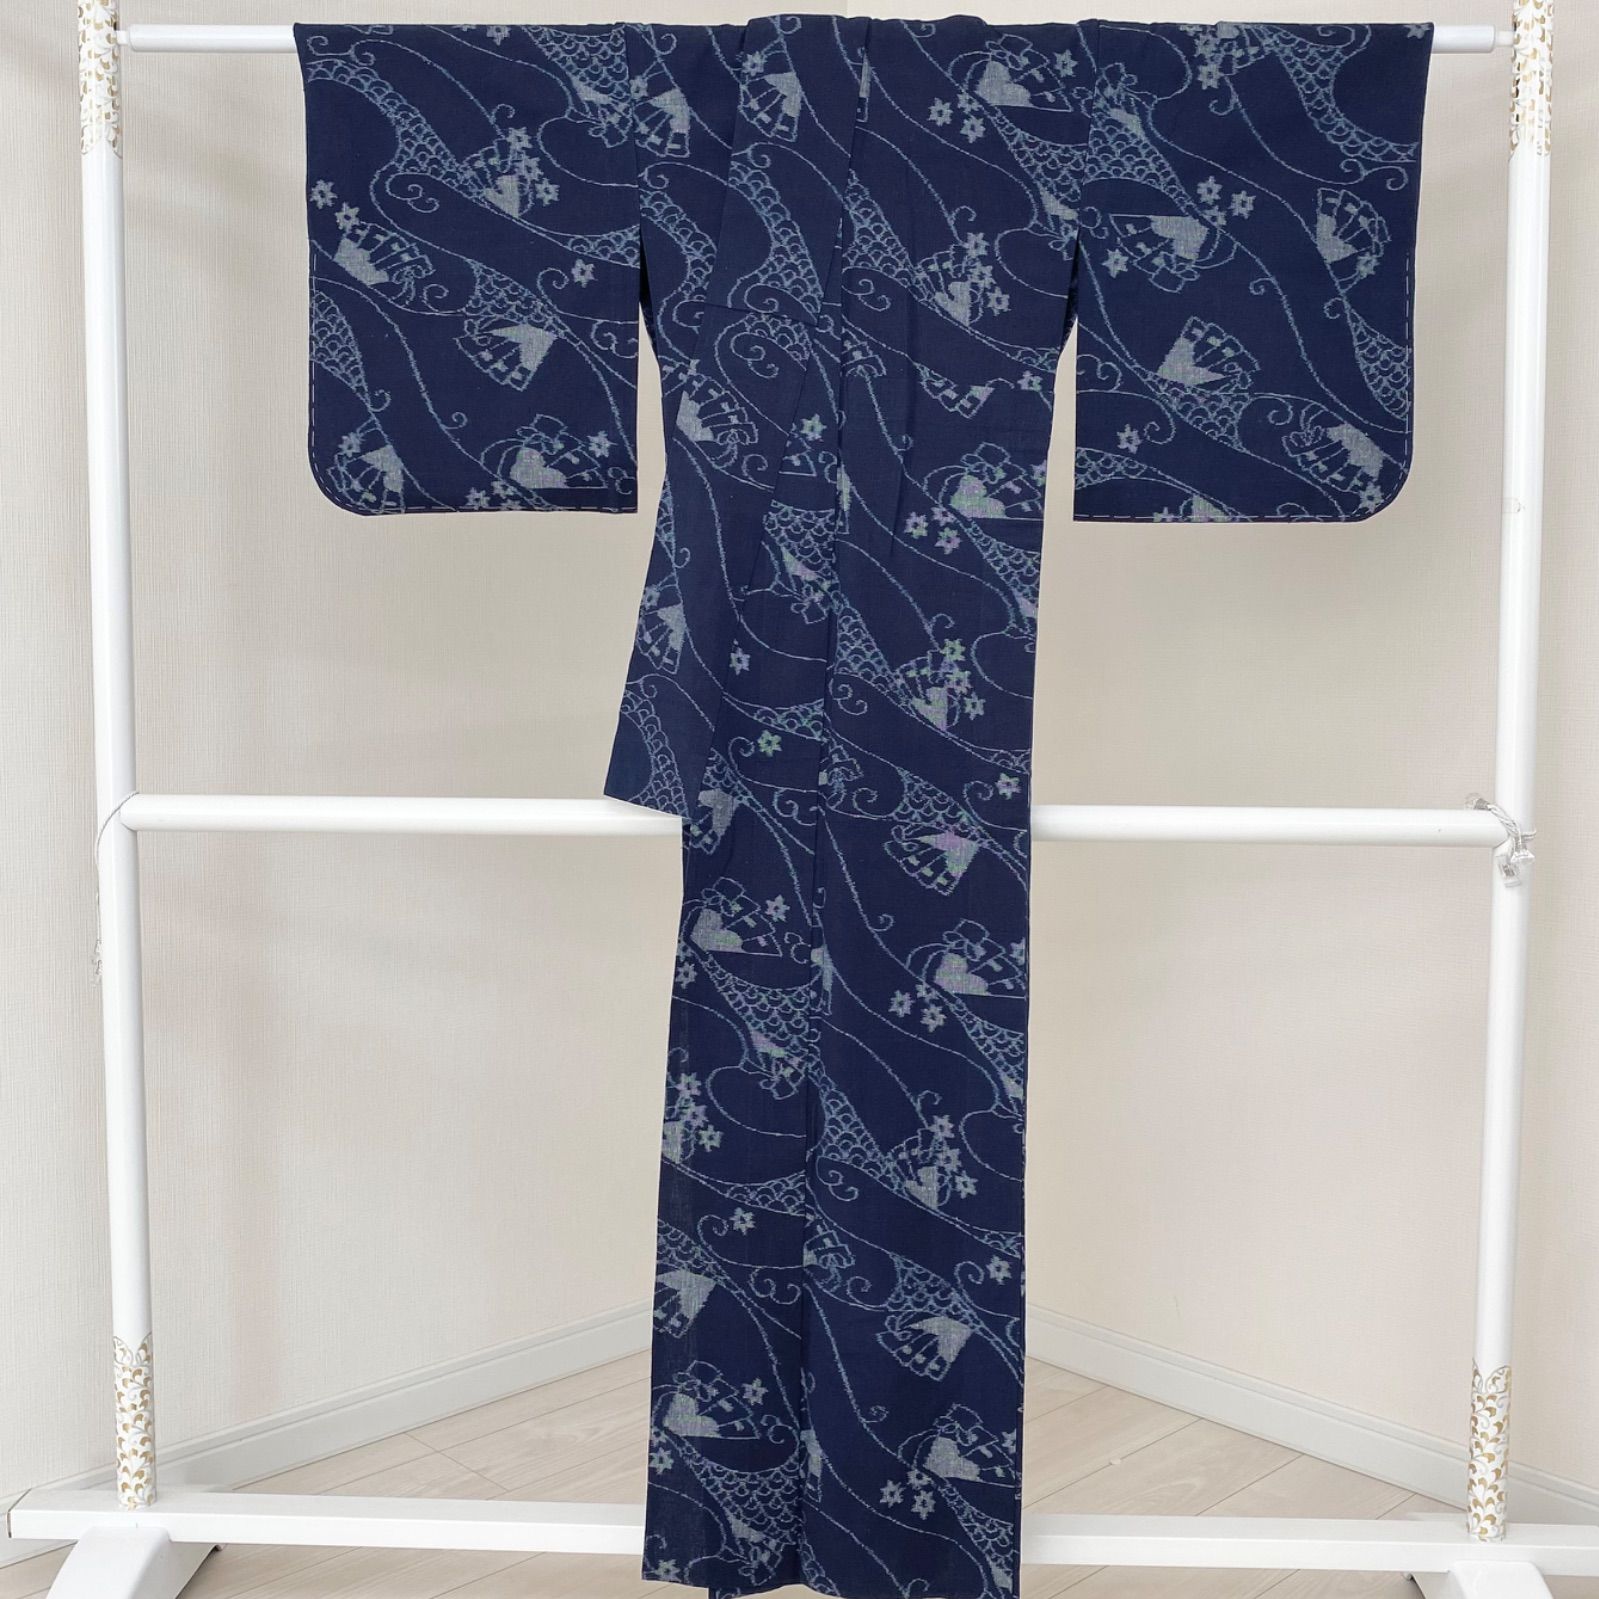 kf-526 単衣 美品 逸品 久留米絣 藍染 重要無形文化財 中尾清 作 木綿 小紋